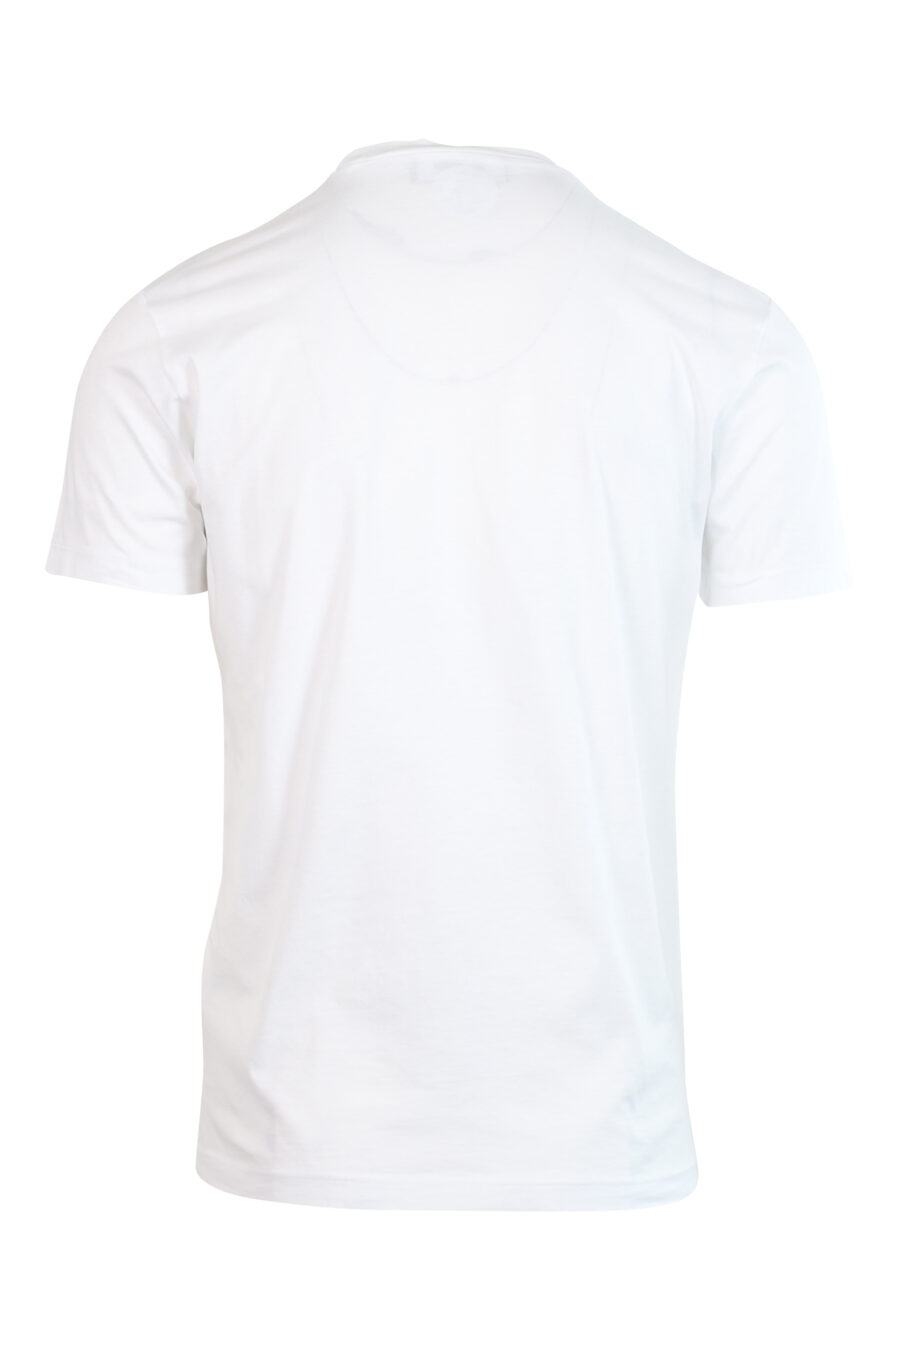 Weißes T-Shirt mit vertikalem Maxilogo "icon" - 8052134980989 2